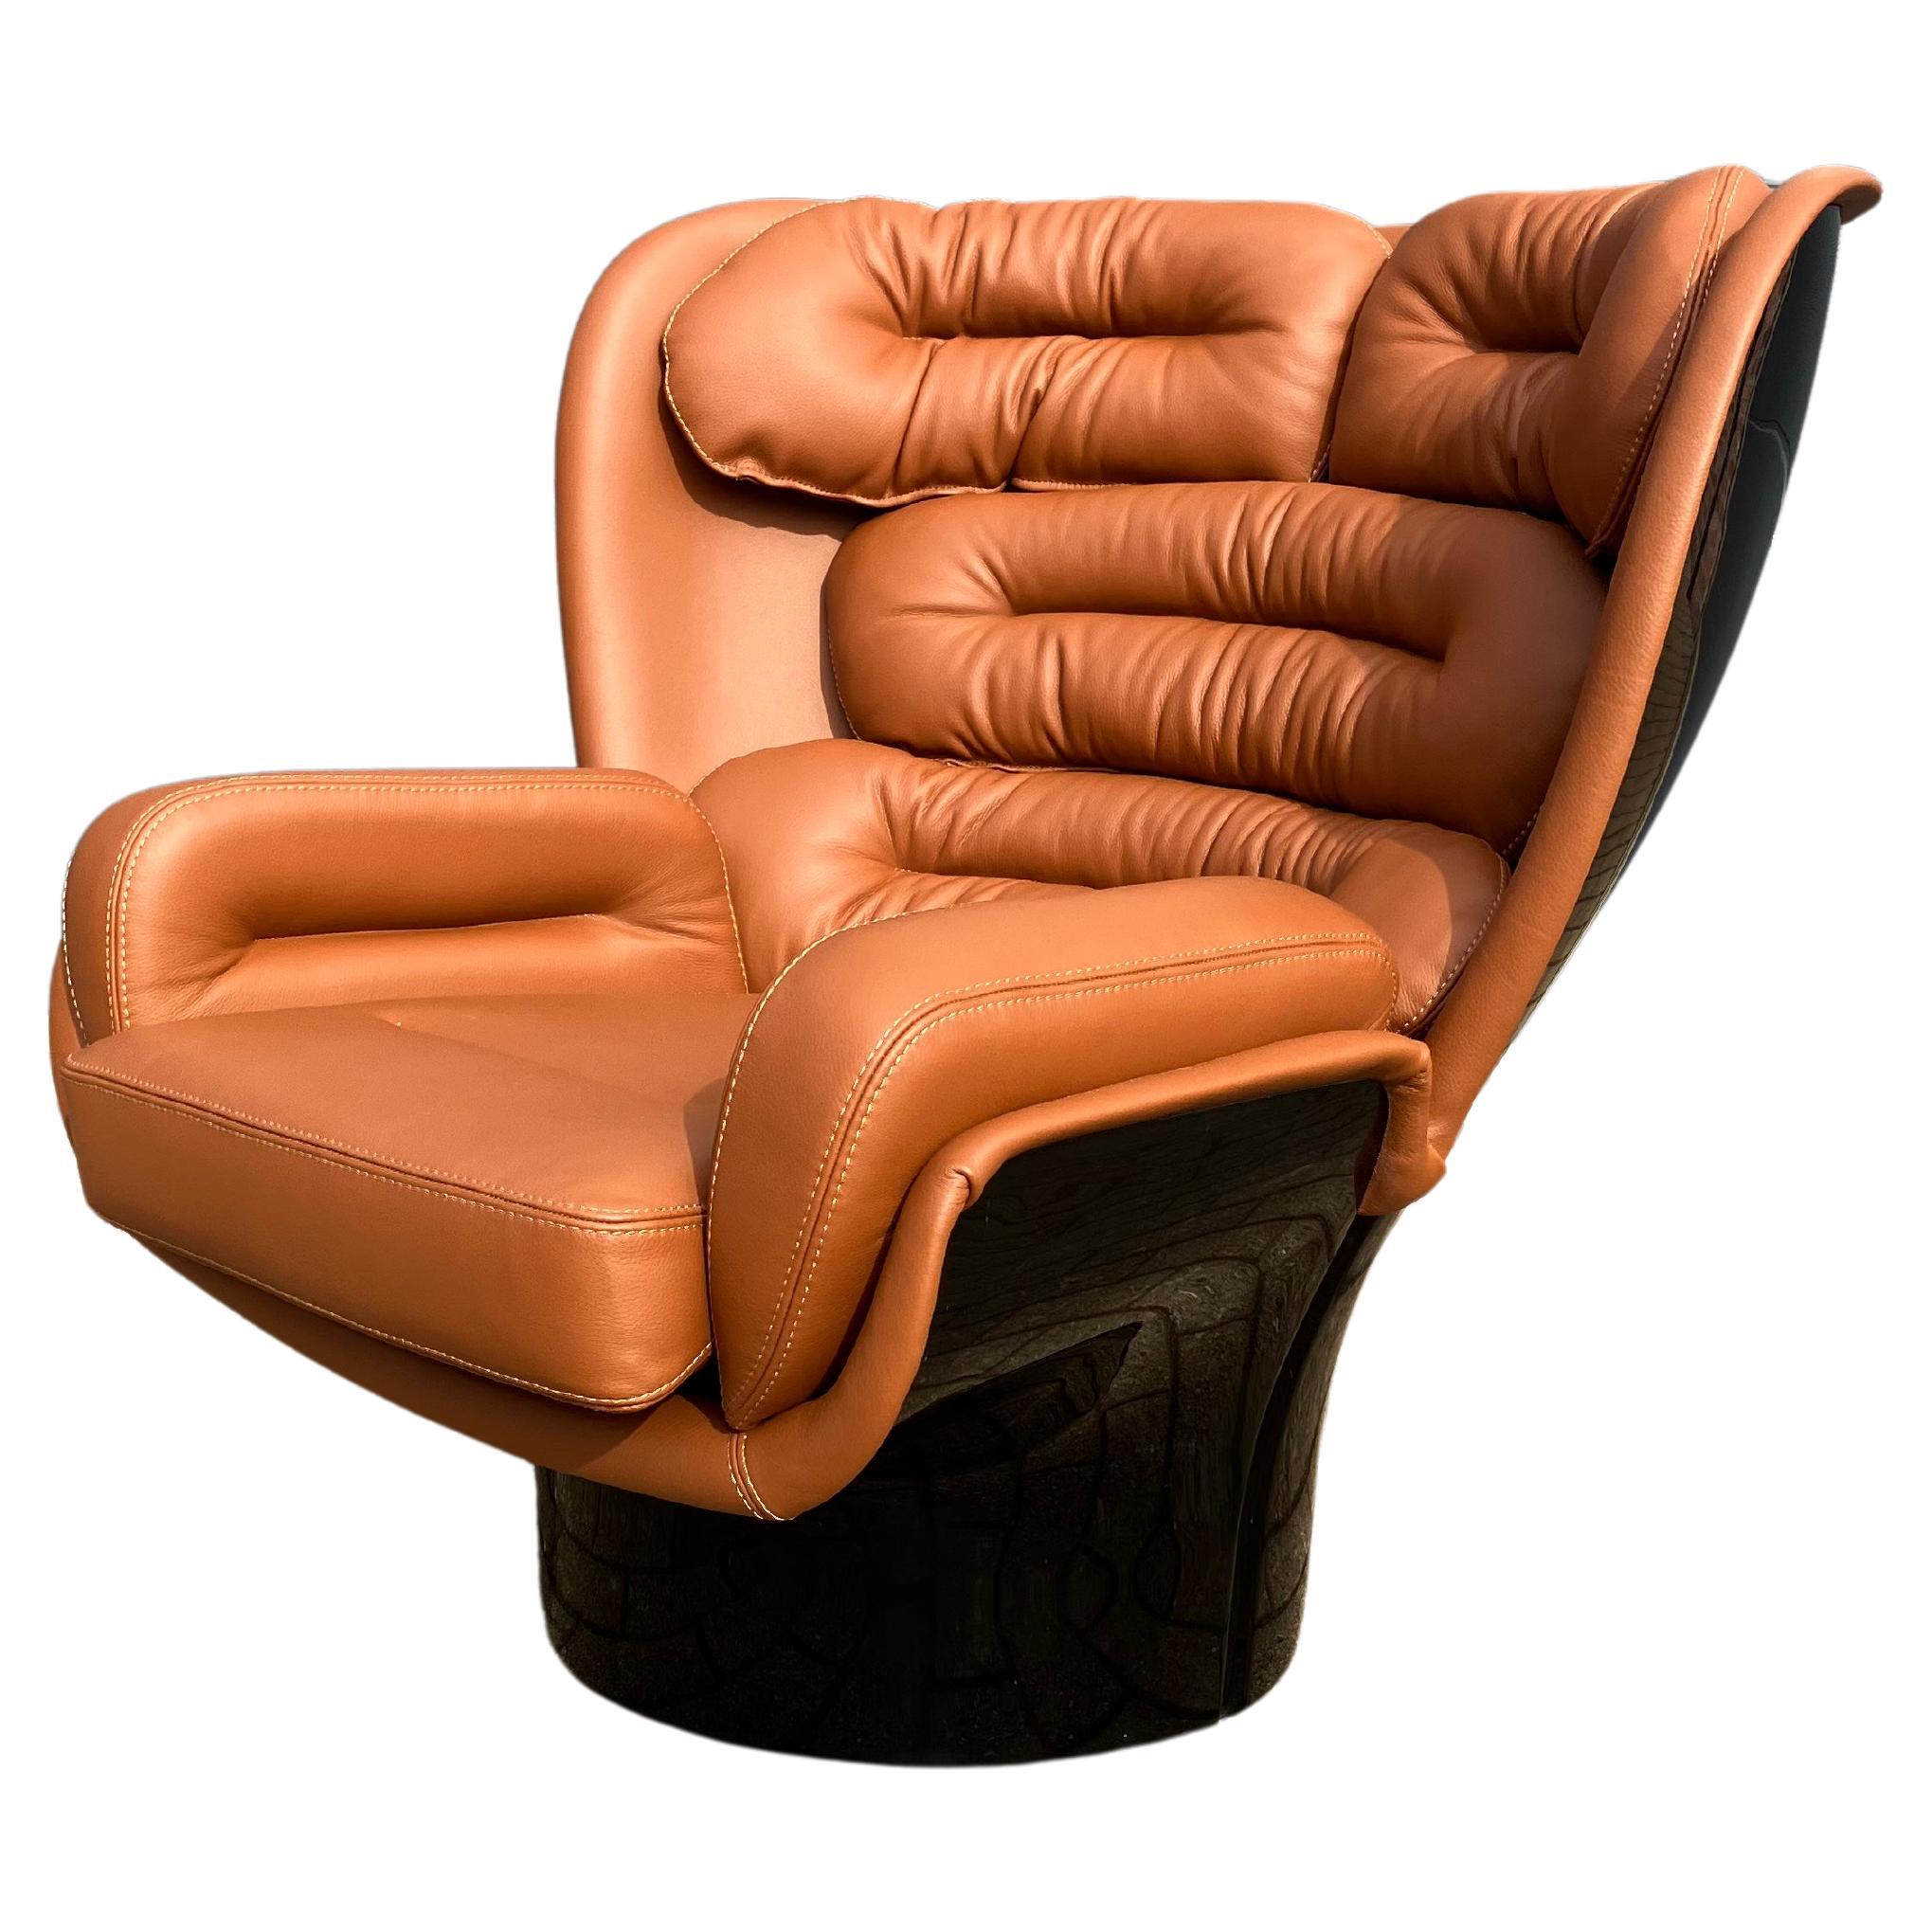 Joe Colombo Elda Chair Cognac leather, Black shell For Sale